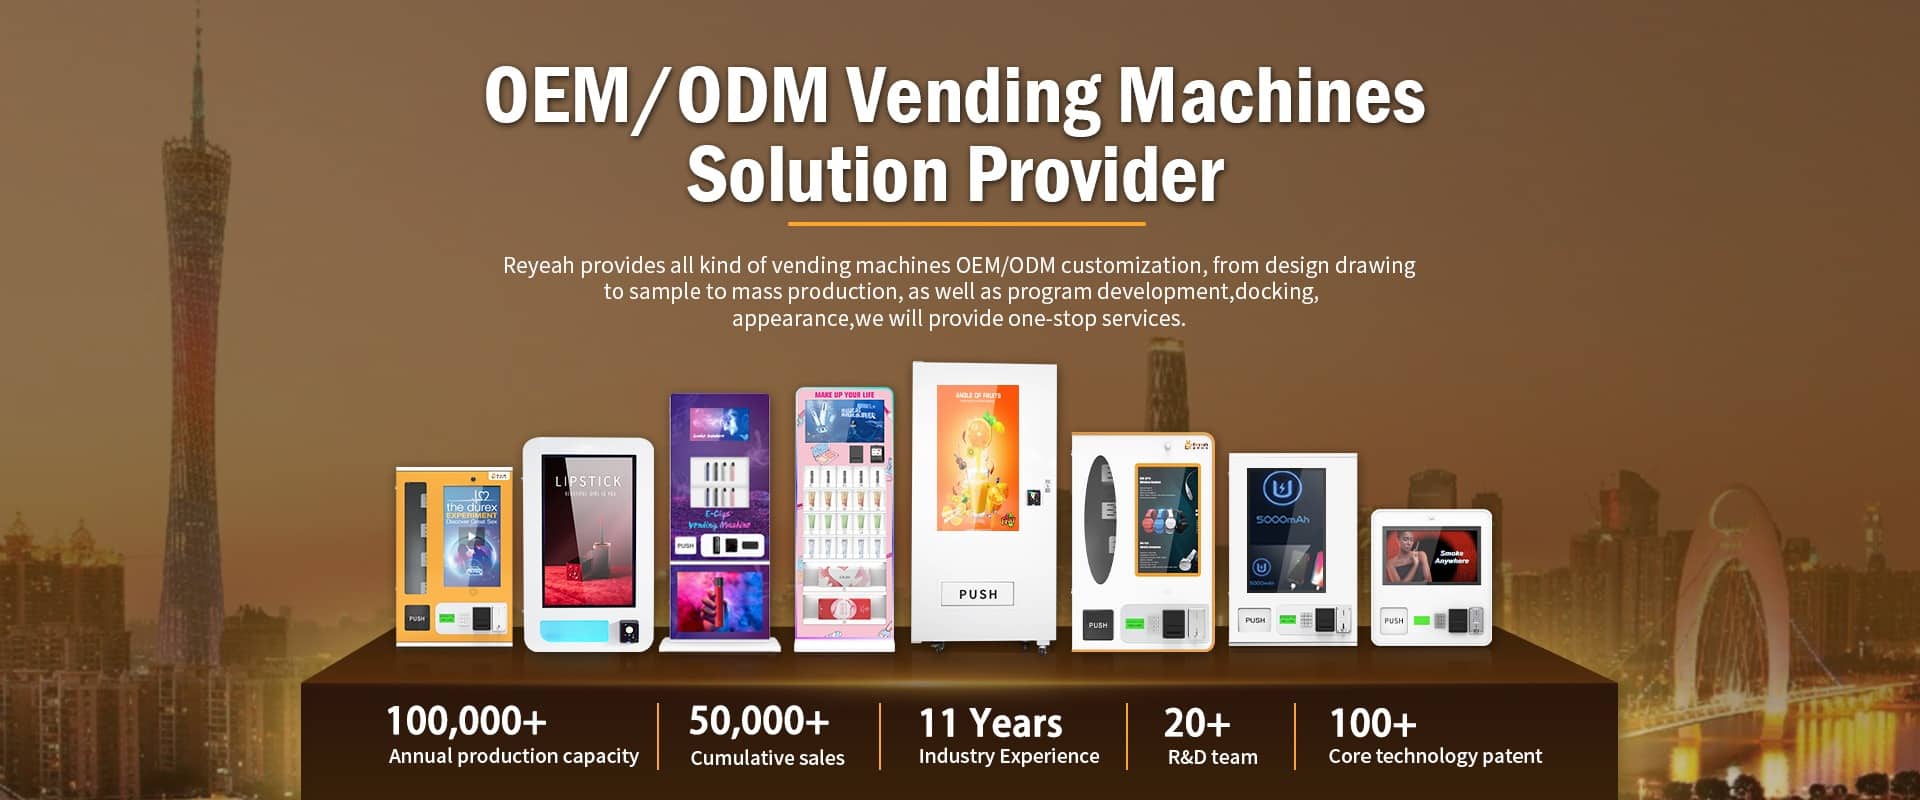 OEM/ODM Vending Machines Solution Provider